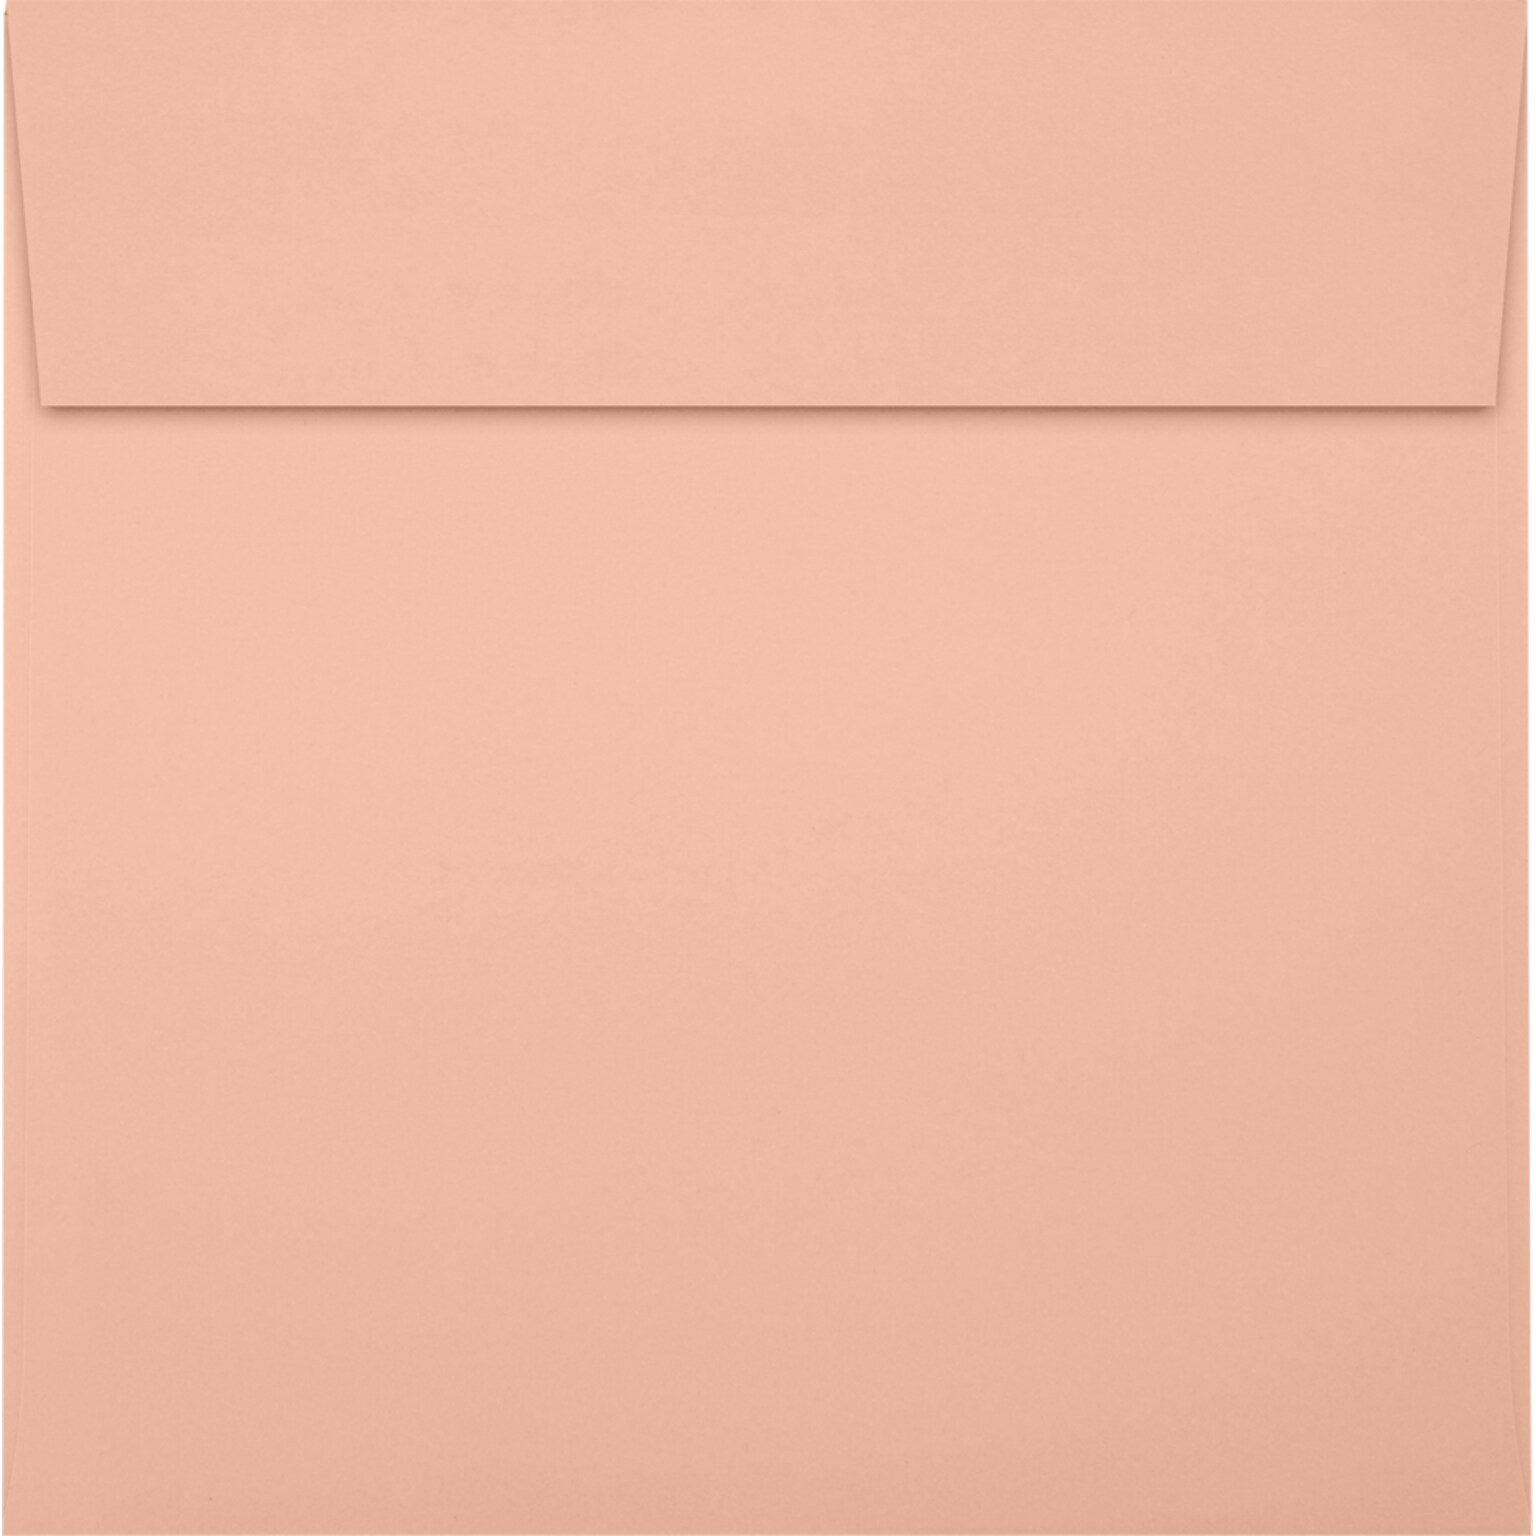 JAM Paper Square Envelopes, Peel & Press, Blush Pink, 6 x 6, 500 Pack (8525-114-500)